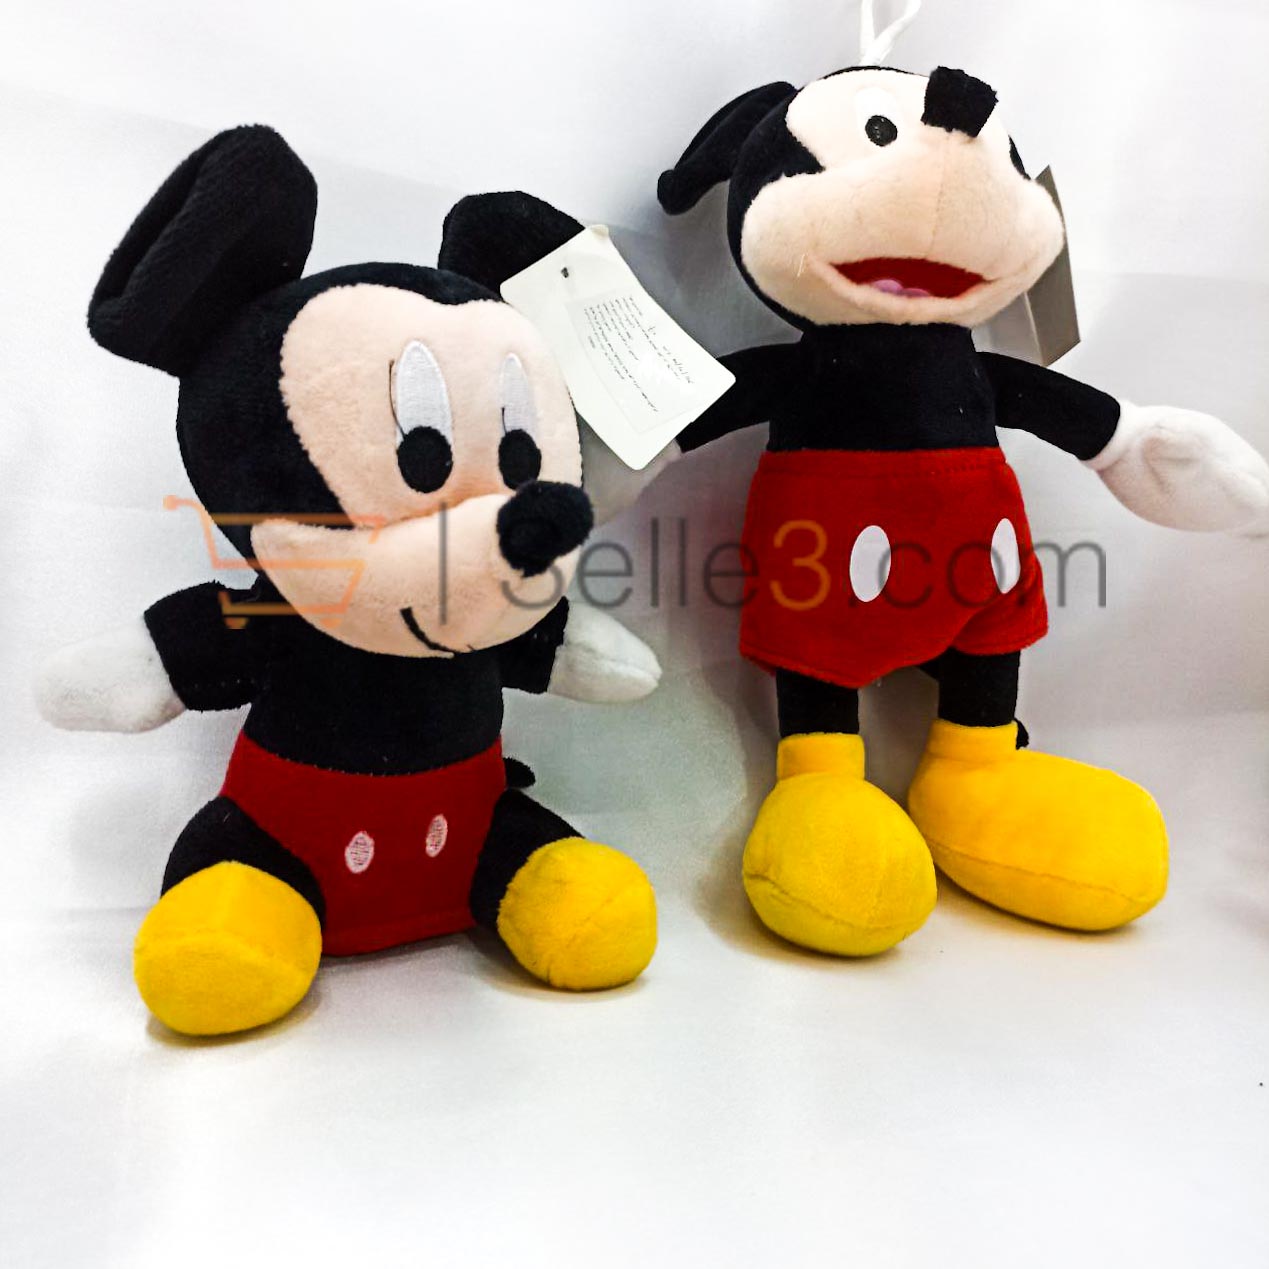 دمية ميكي بيبي ميمي رضيع ماوس قماشية Poupee Mickey Mouse Bebe mimi Doll